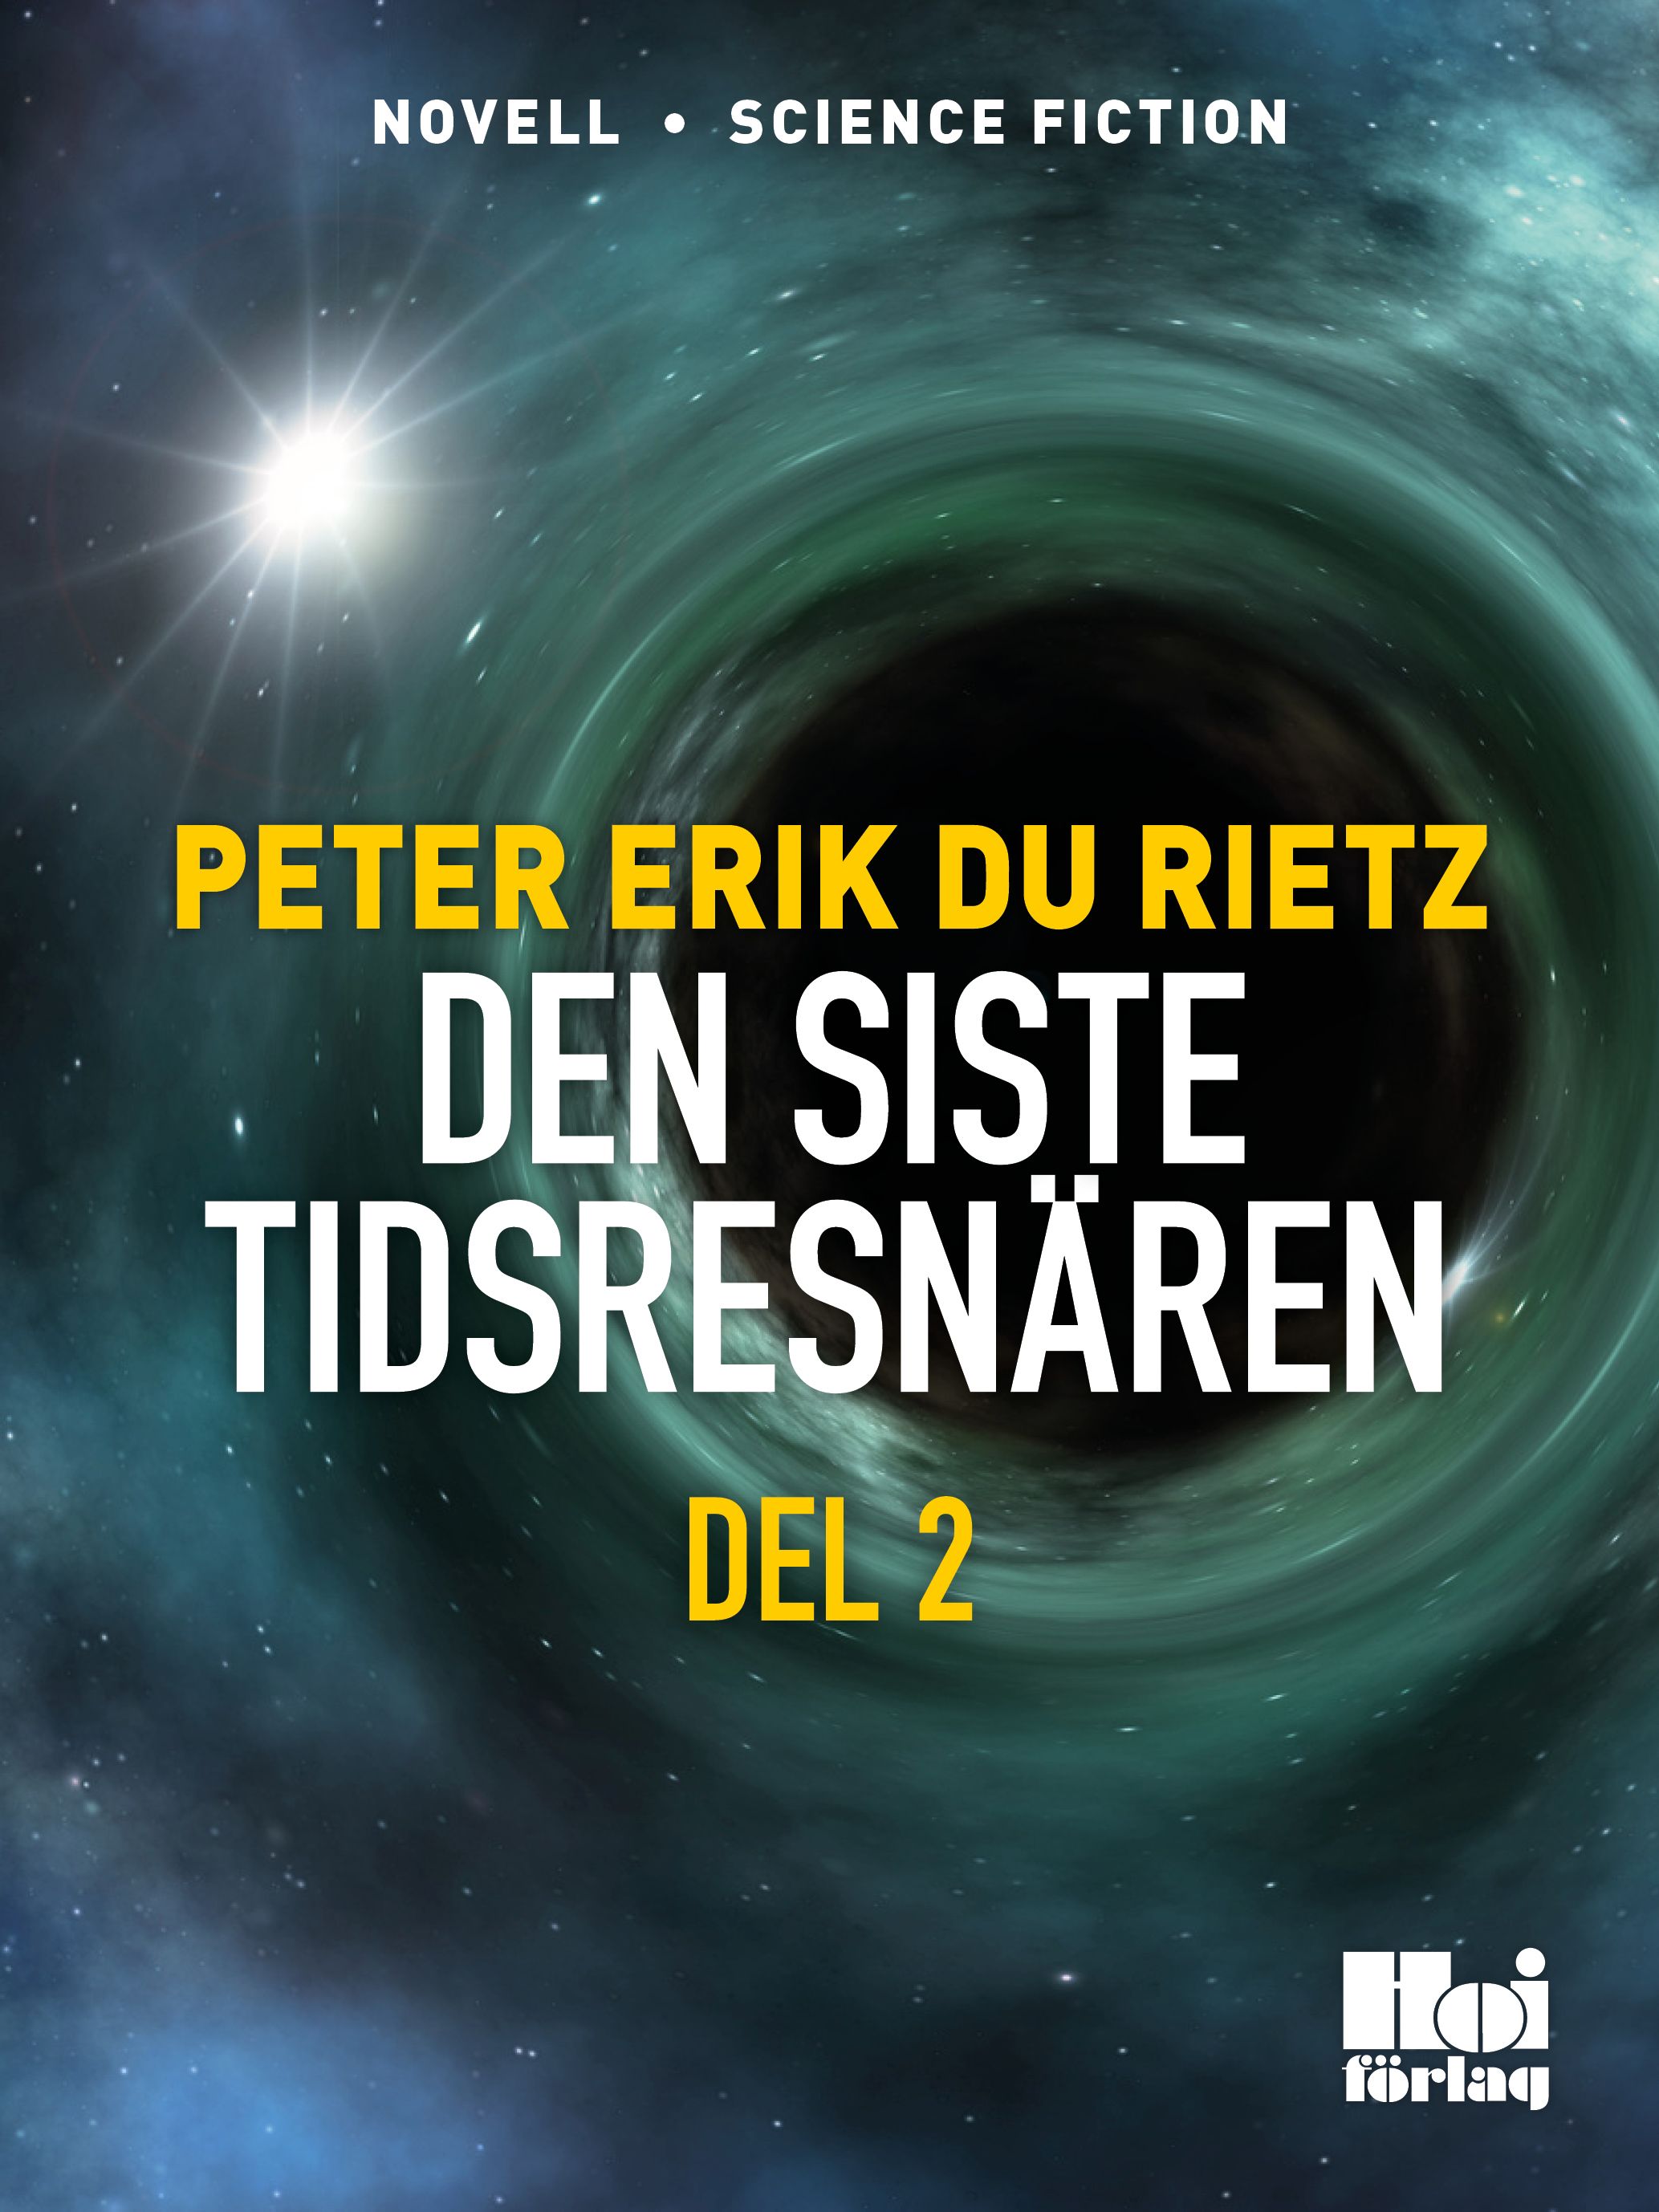 Den siste tidsresenären del 2, eBook by Peter Erik Du Rietz